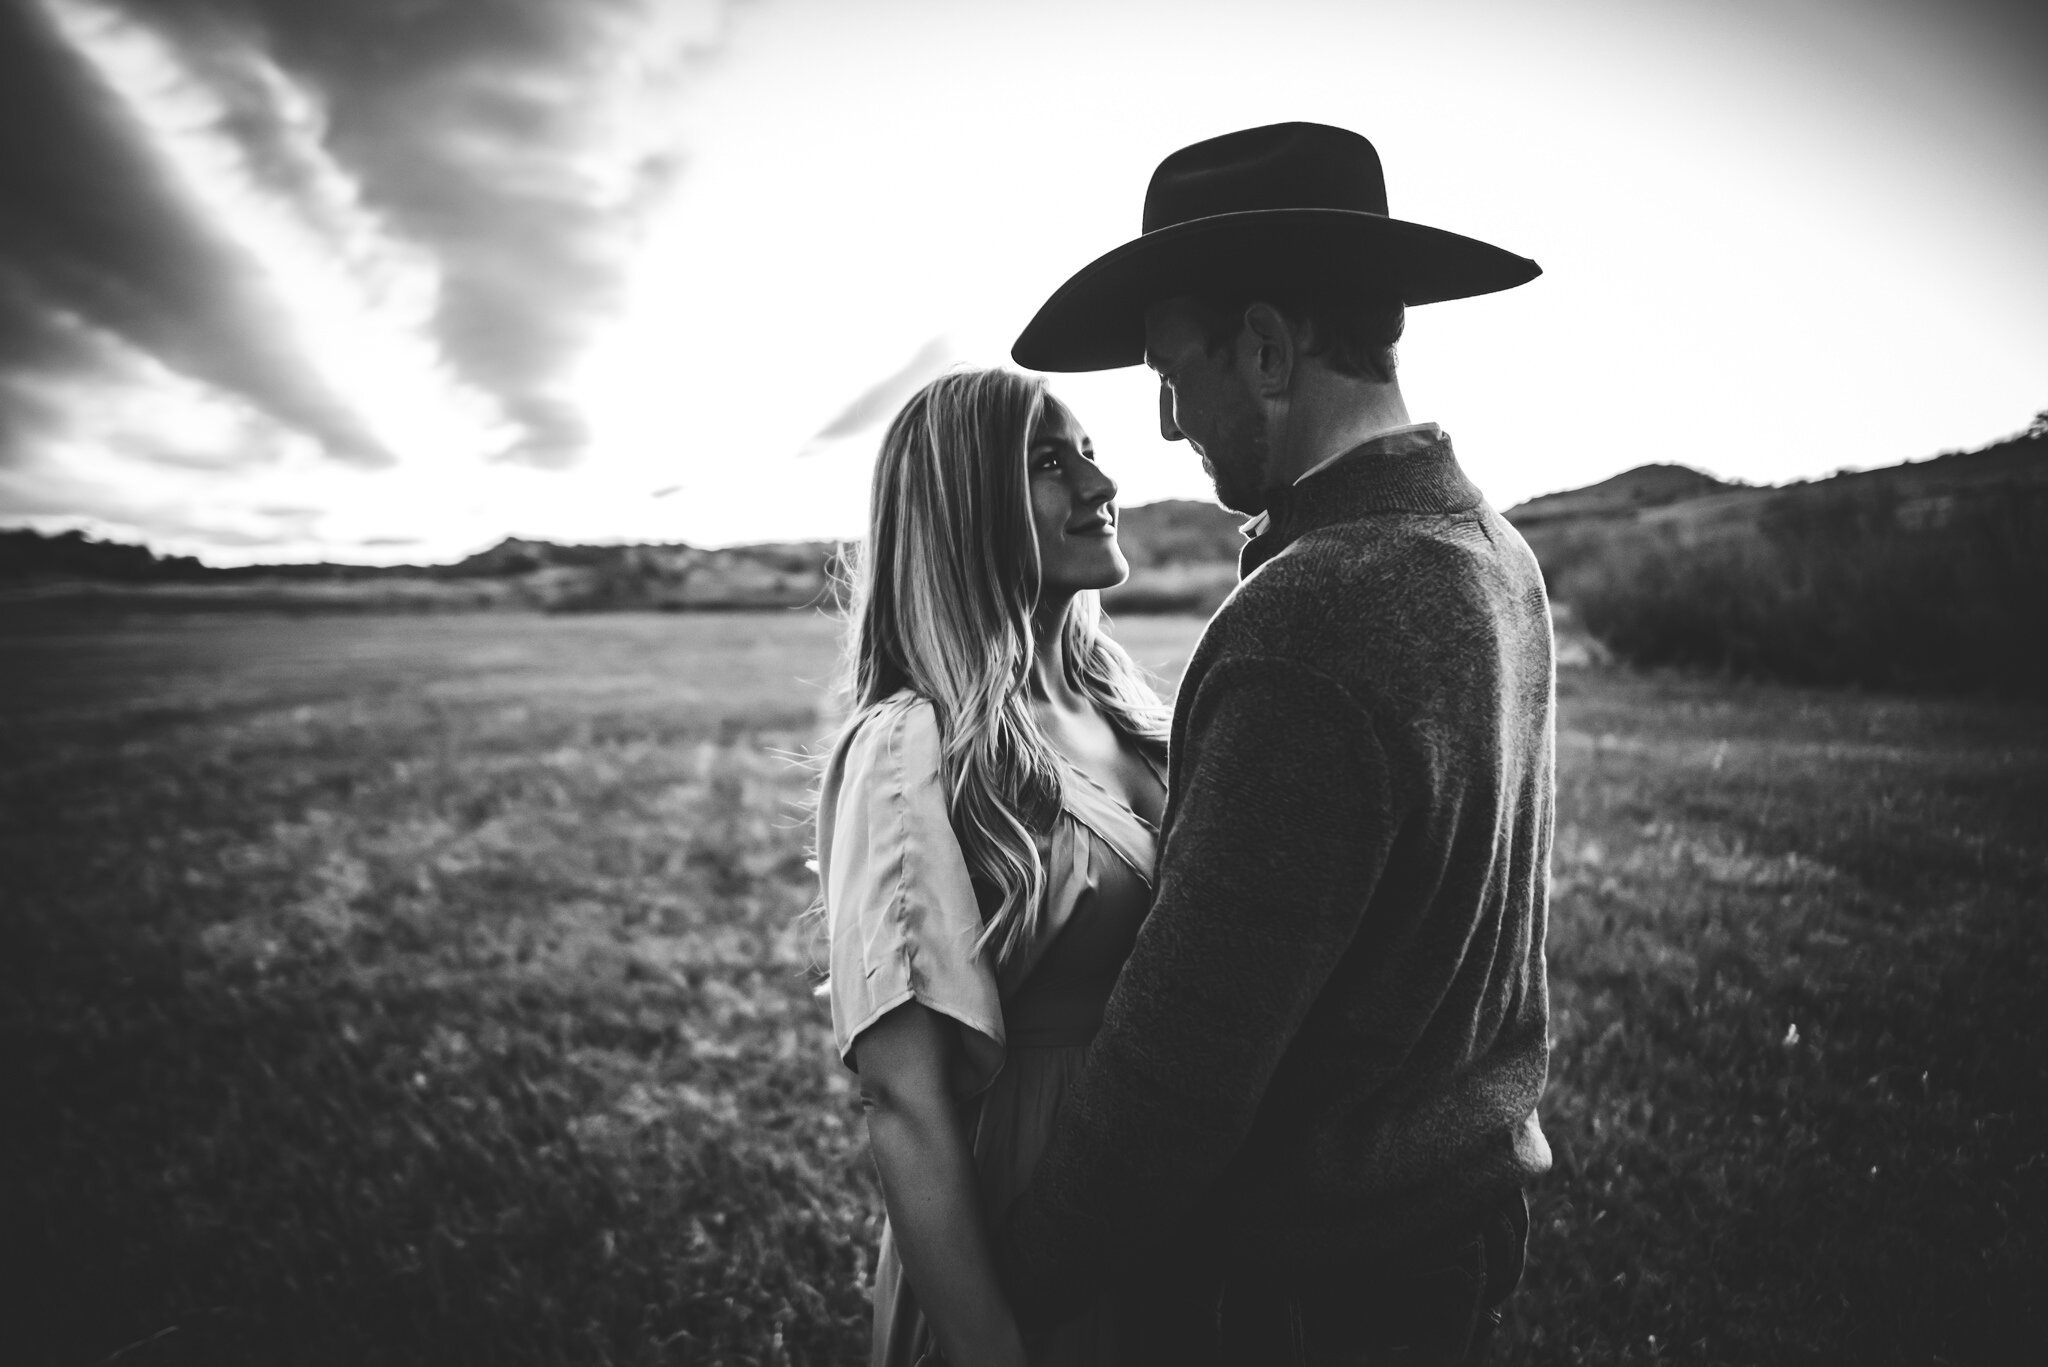 Shelby+and+Brady+Engagement+Session+Cheyenne+Wyoming+Sunset+Water+Fields+Rocks+Nature+Colorado+Photographer+Wild+Prairie+Photography-41-2020.jpeg